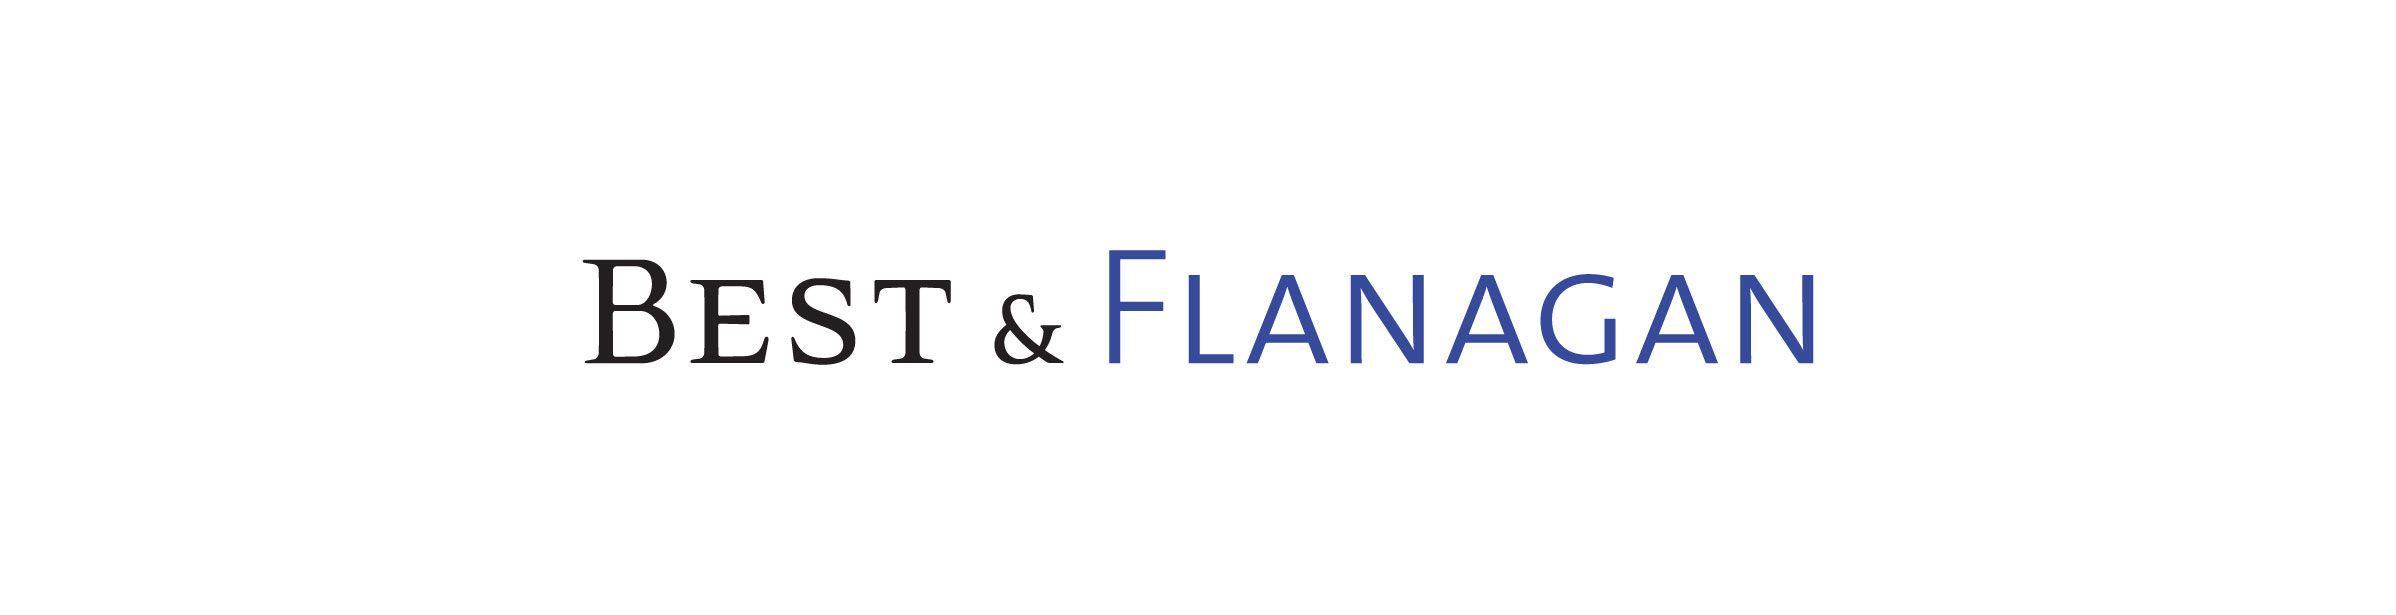 Flanagan Logo - Best & Flanagan BRAND Full Service Branding & Design Agency